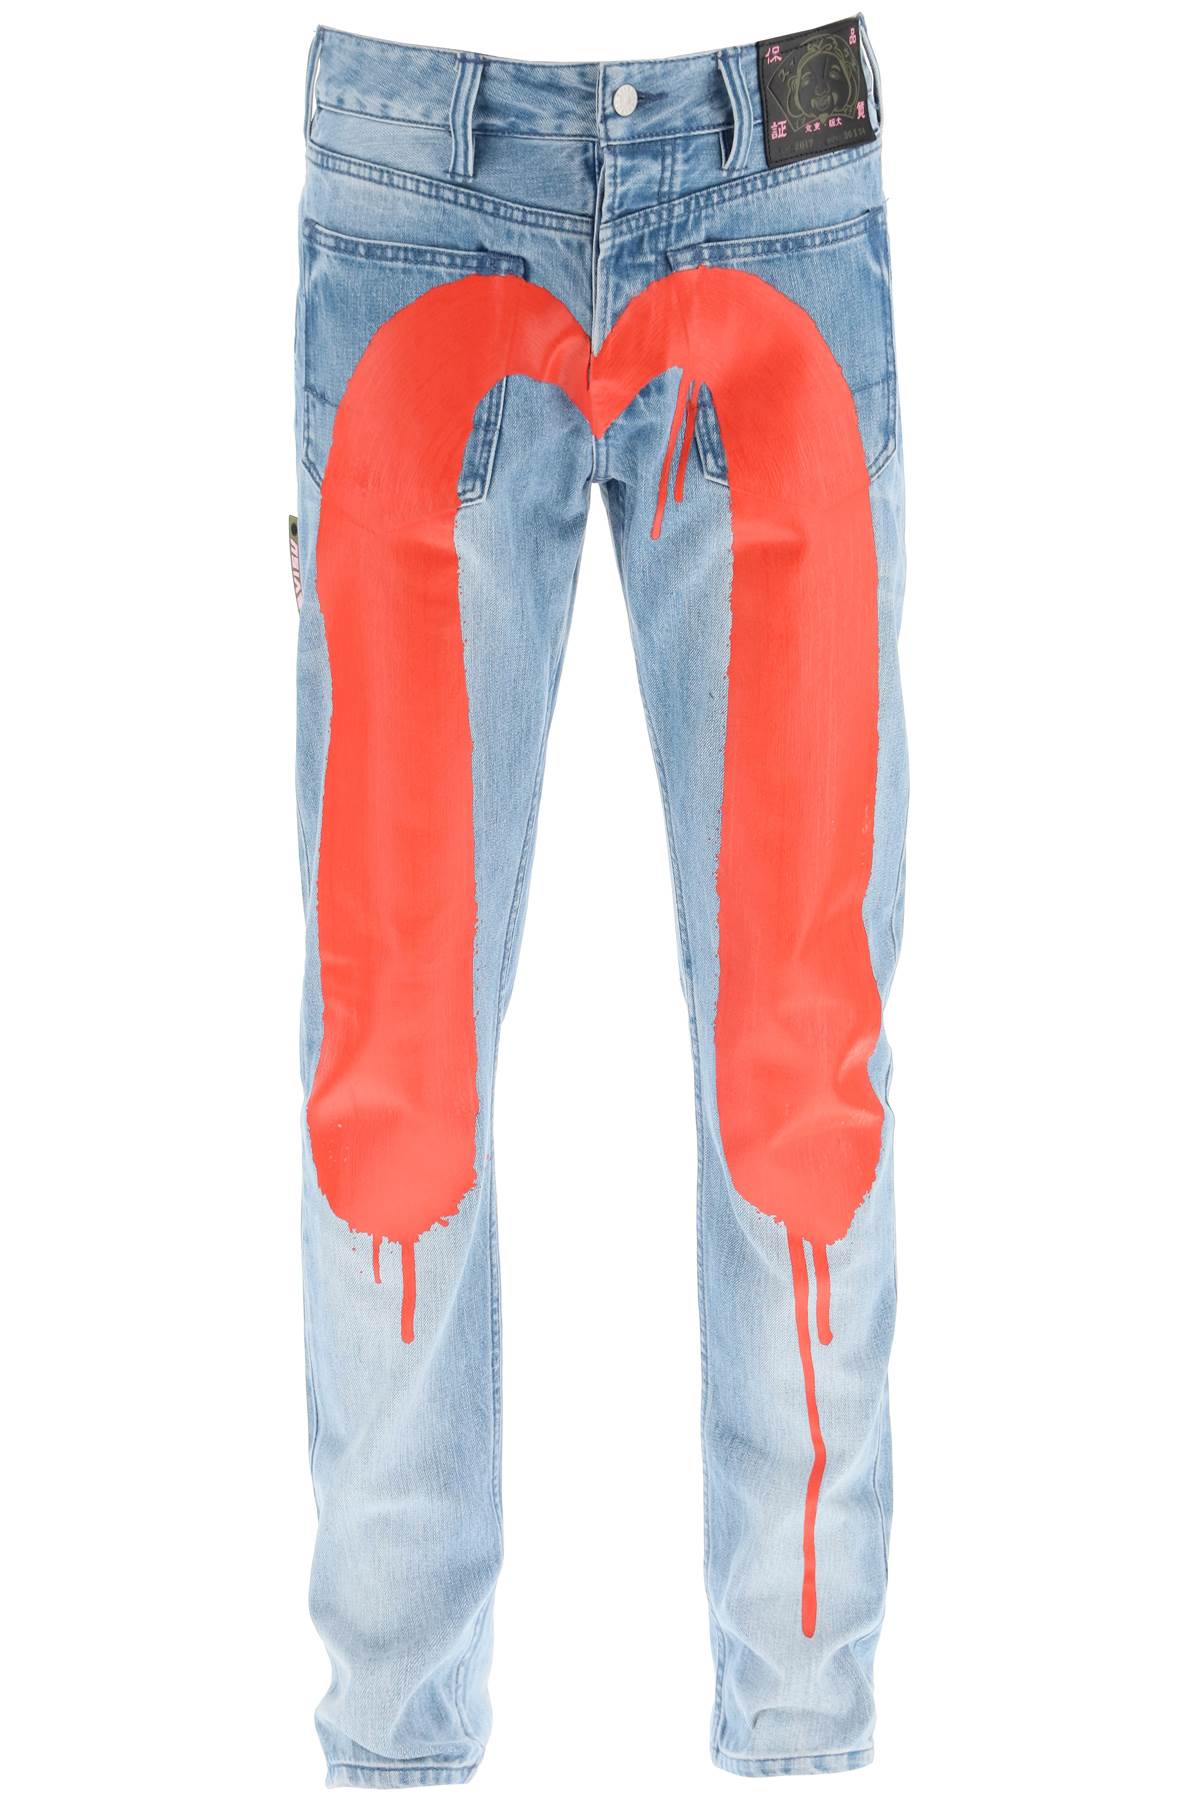 Evisu Daicock Reversed Jeans